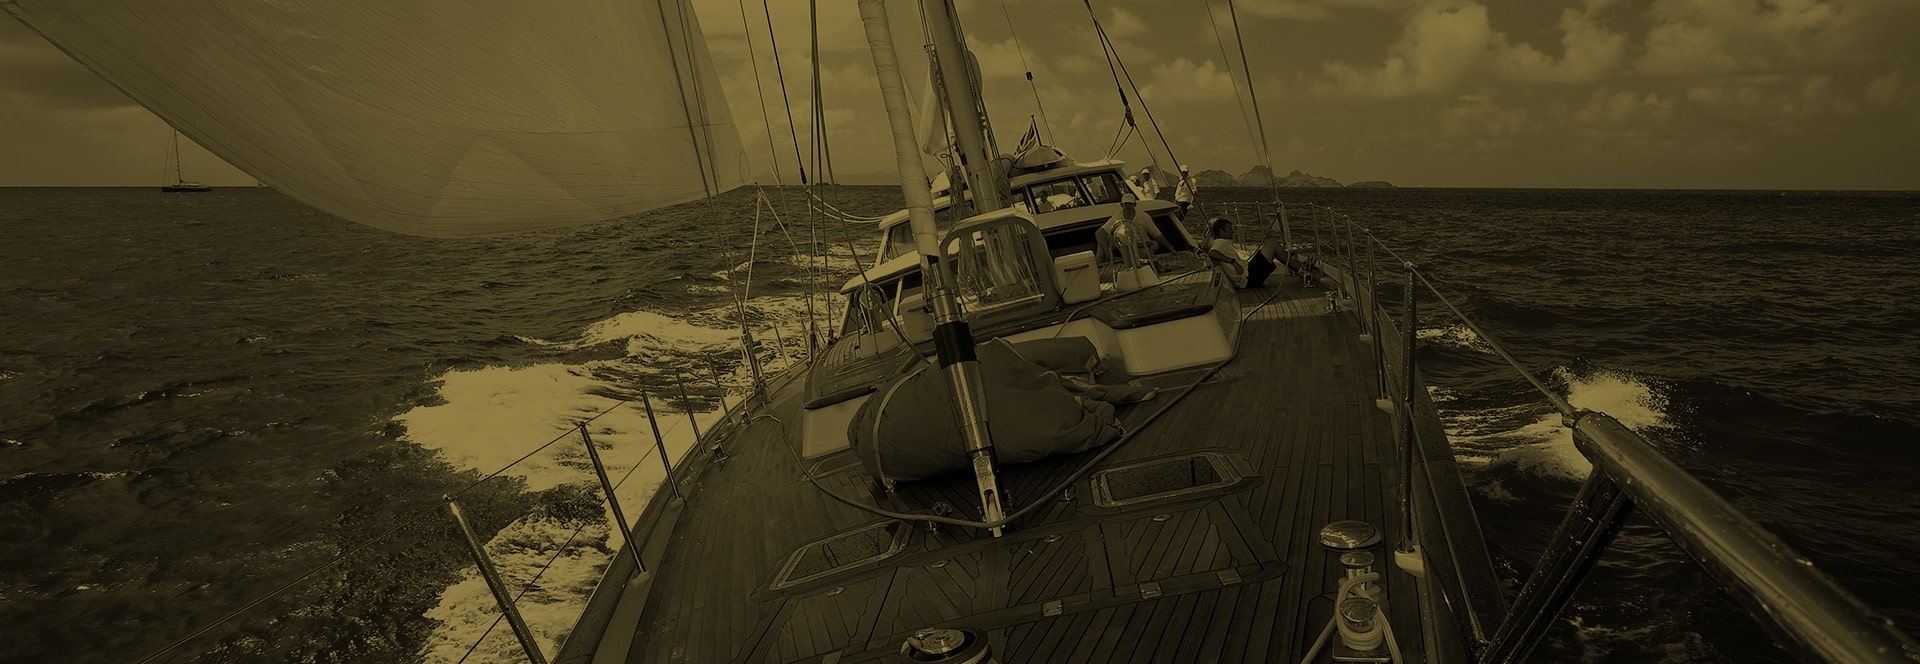 alden 50 sailboat